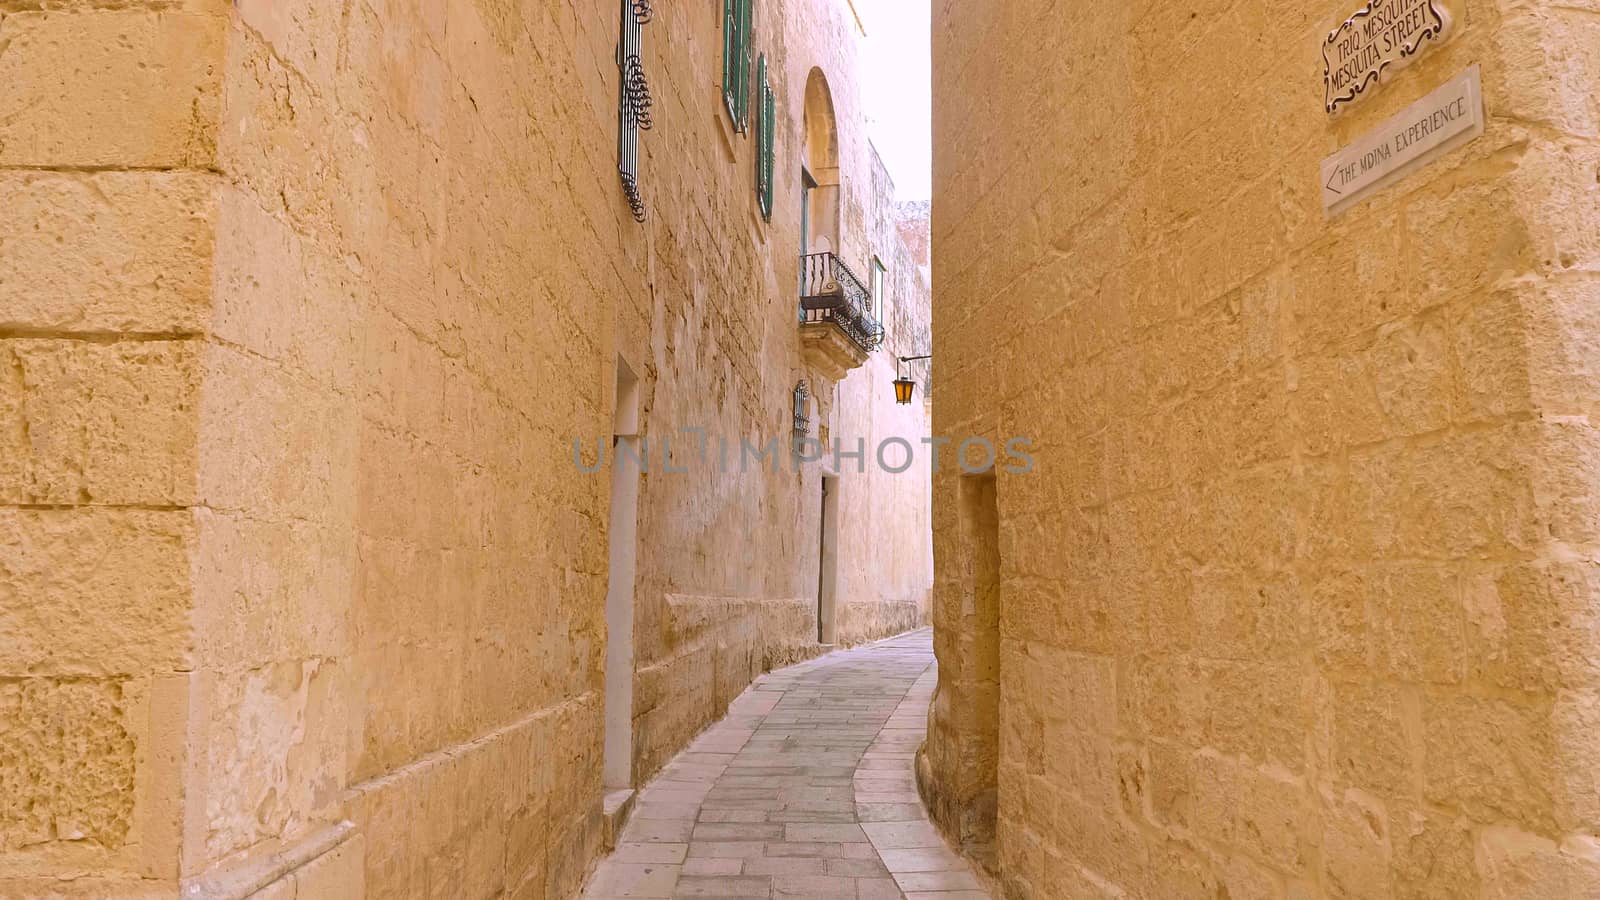 The narrow streets of Mdina in Malta by Lattwein